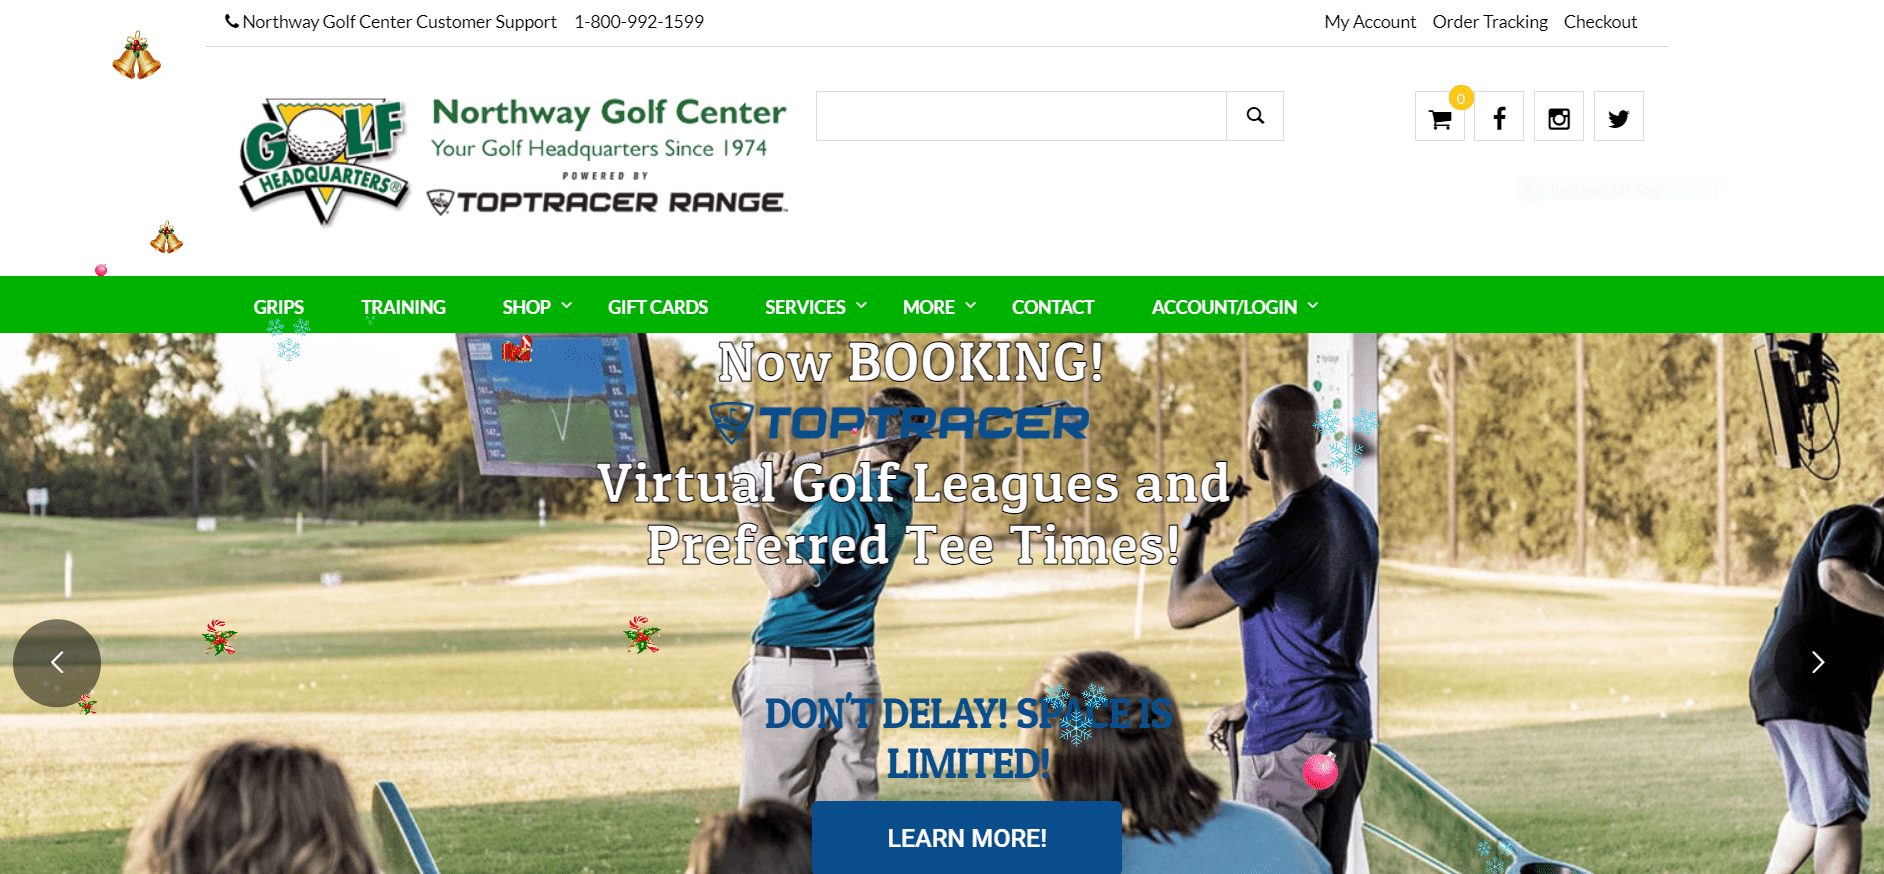 Northway Golf Center website screen shot